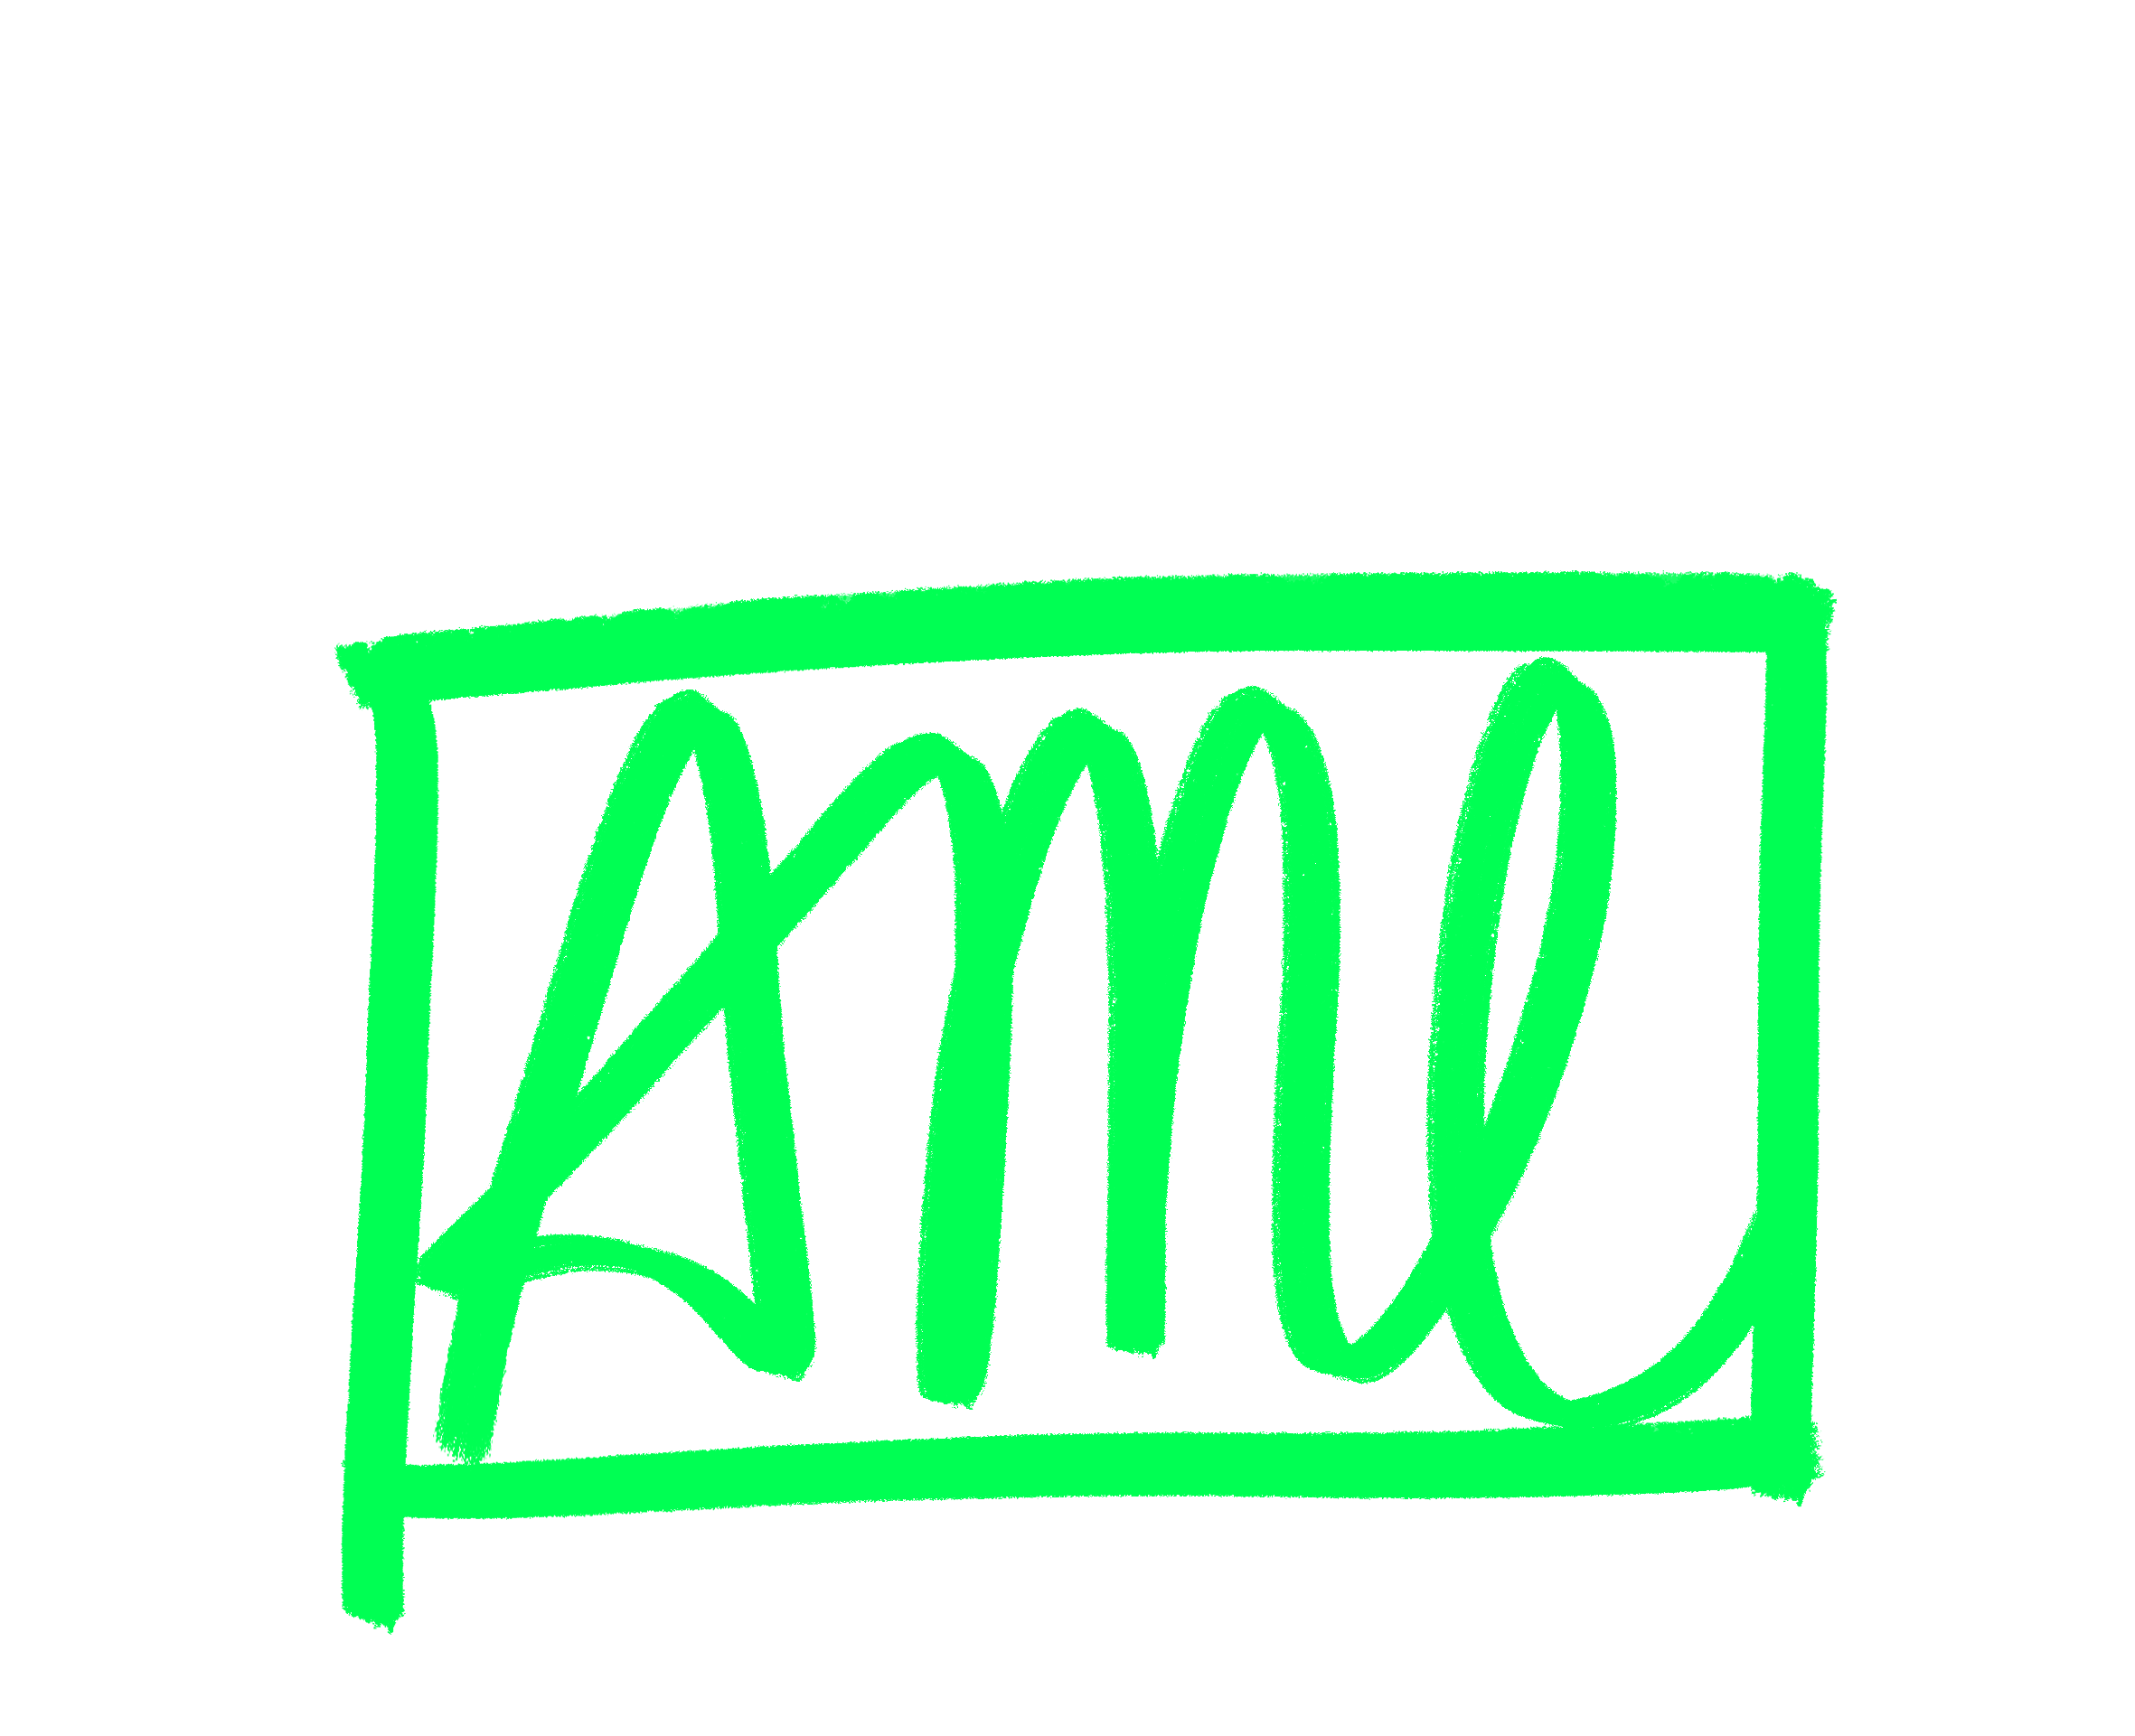 Amélie-Anne Calmo